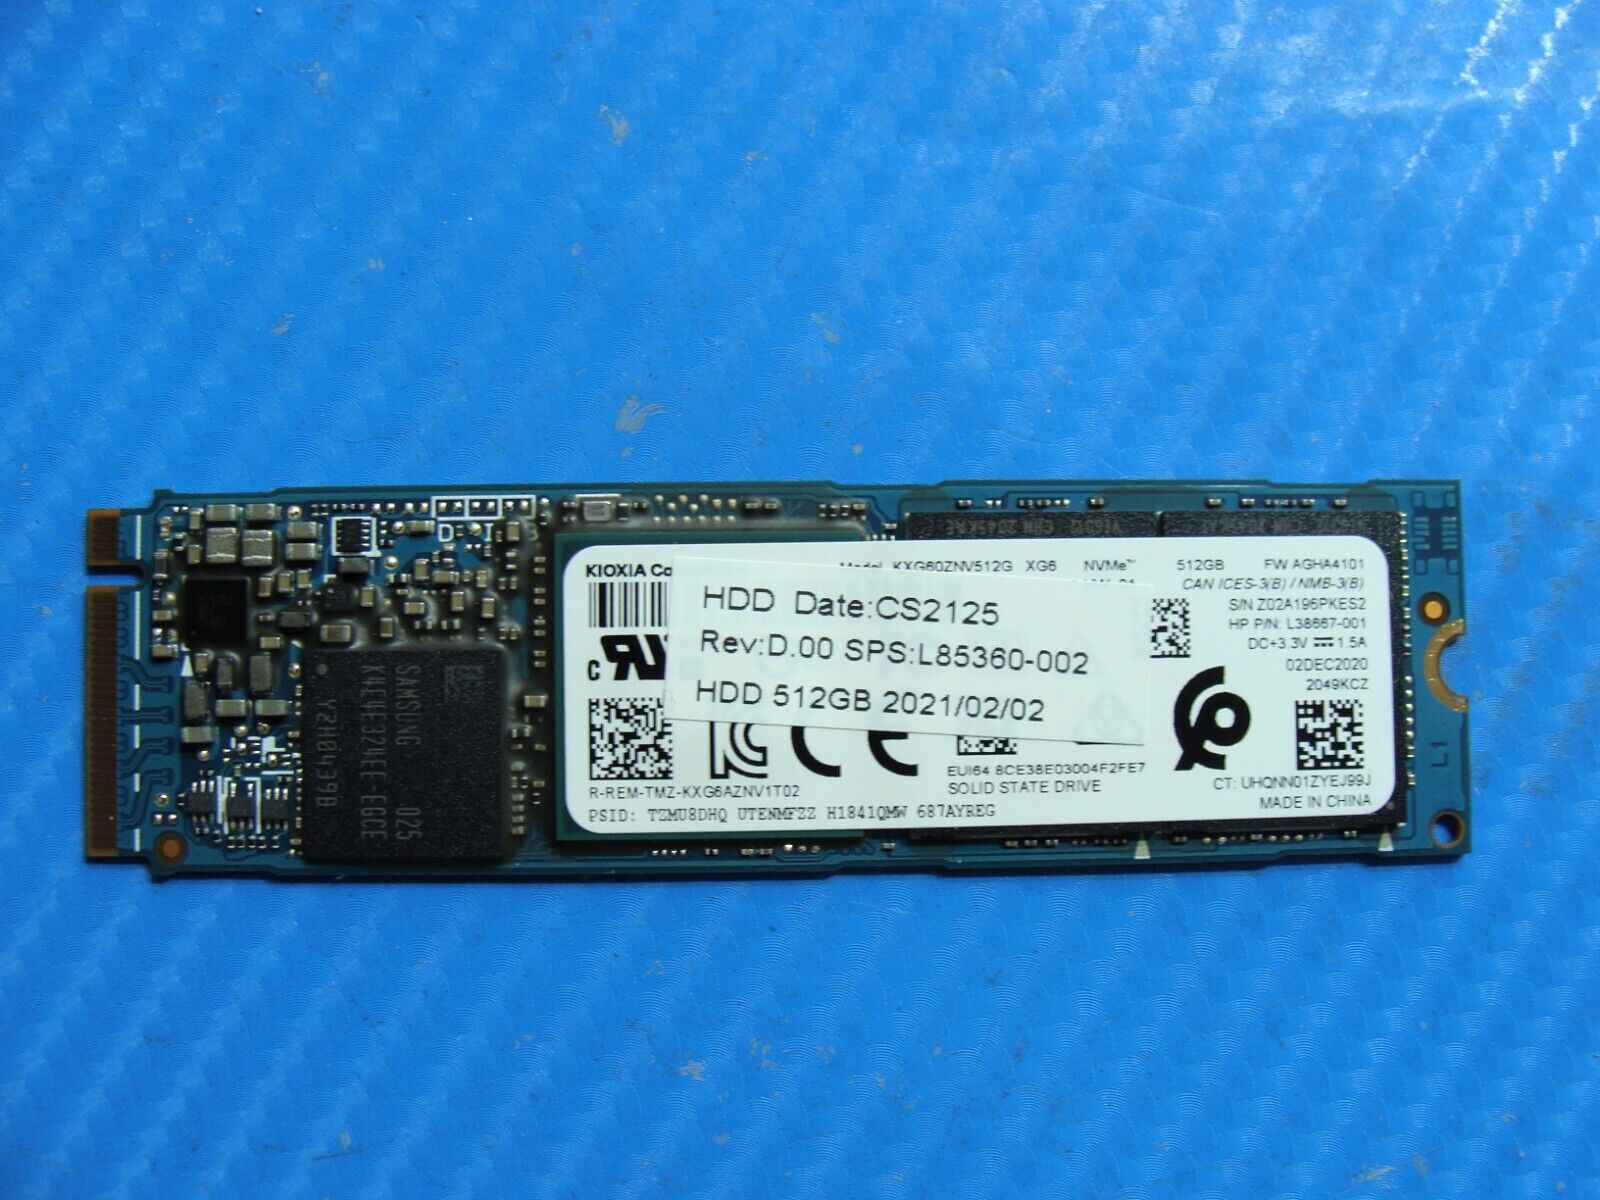 HP 840 G7 Kioxia 512GB NVMe M.2 SSD Solid State Drive KXG60ZNV512G L85360-002